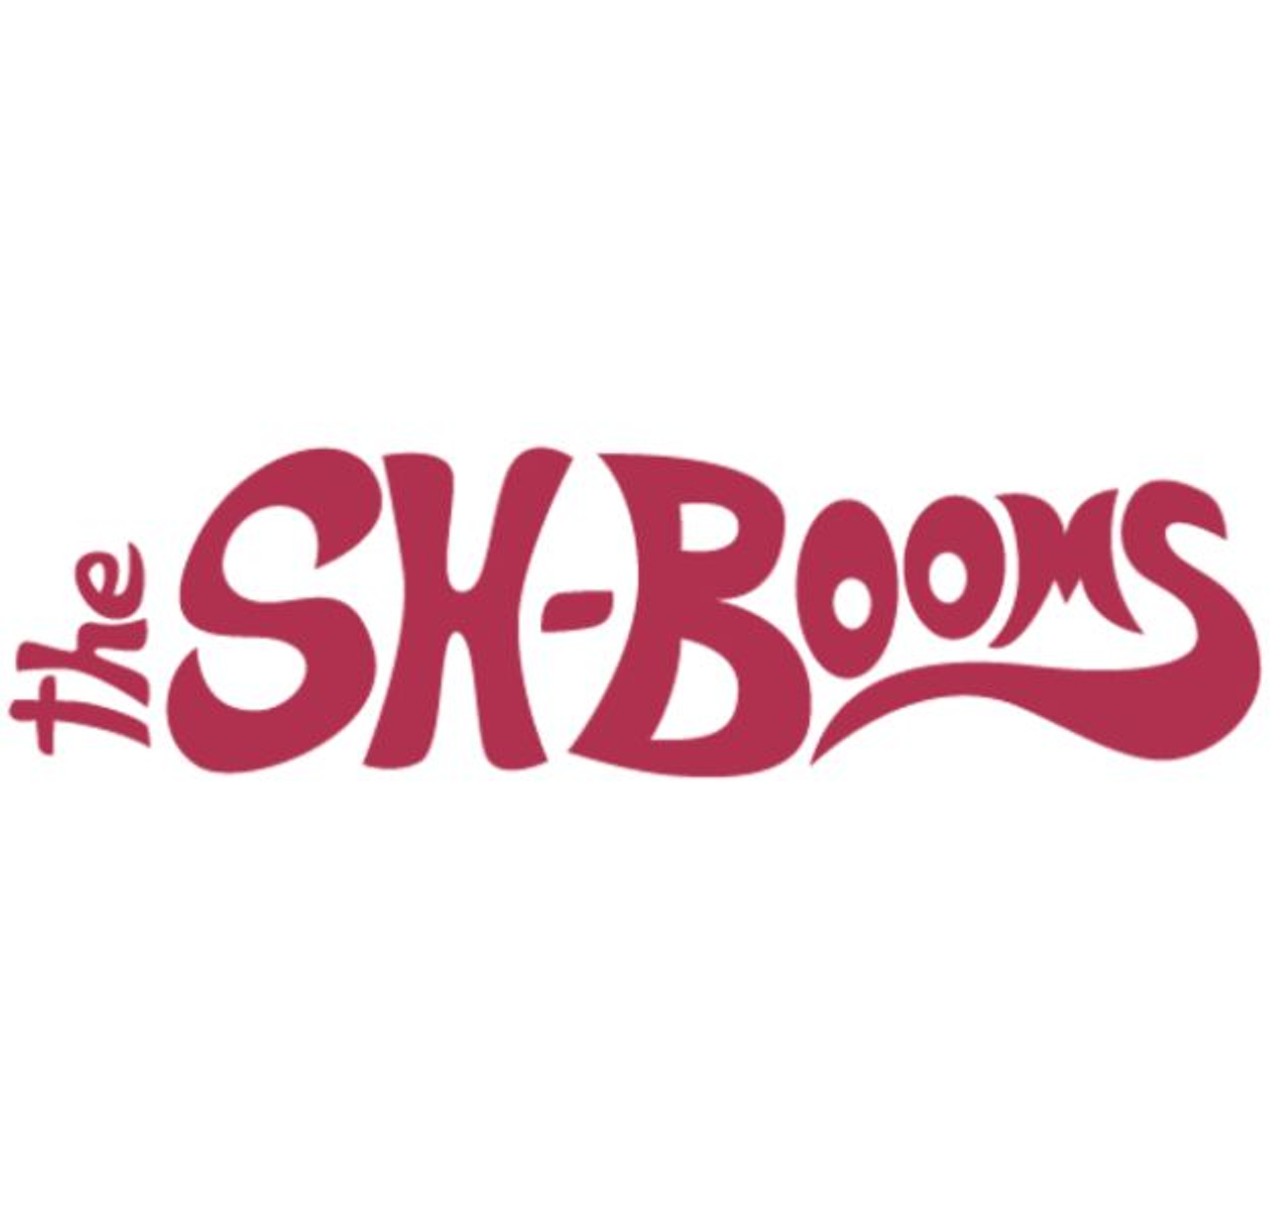 The Sh-Booms 
Fri., June 16, 8 p.m. $10.